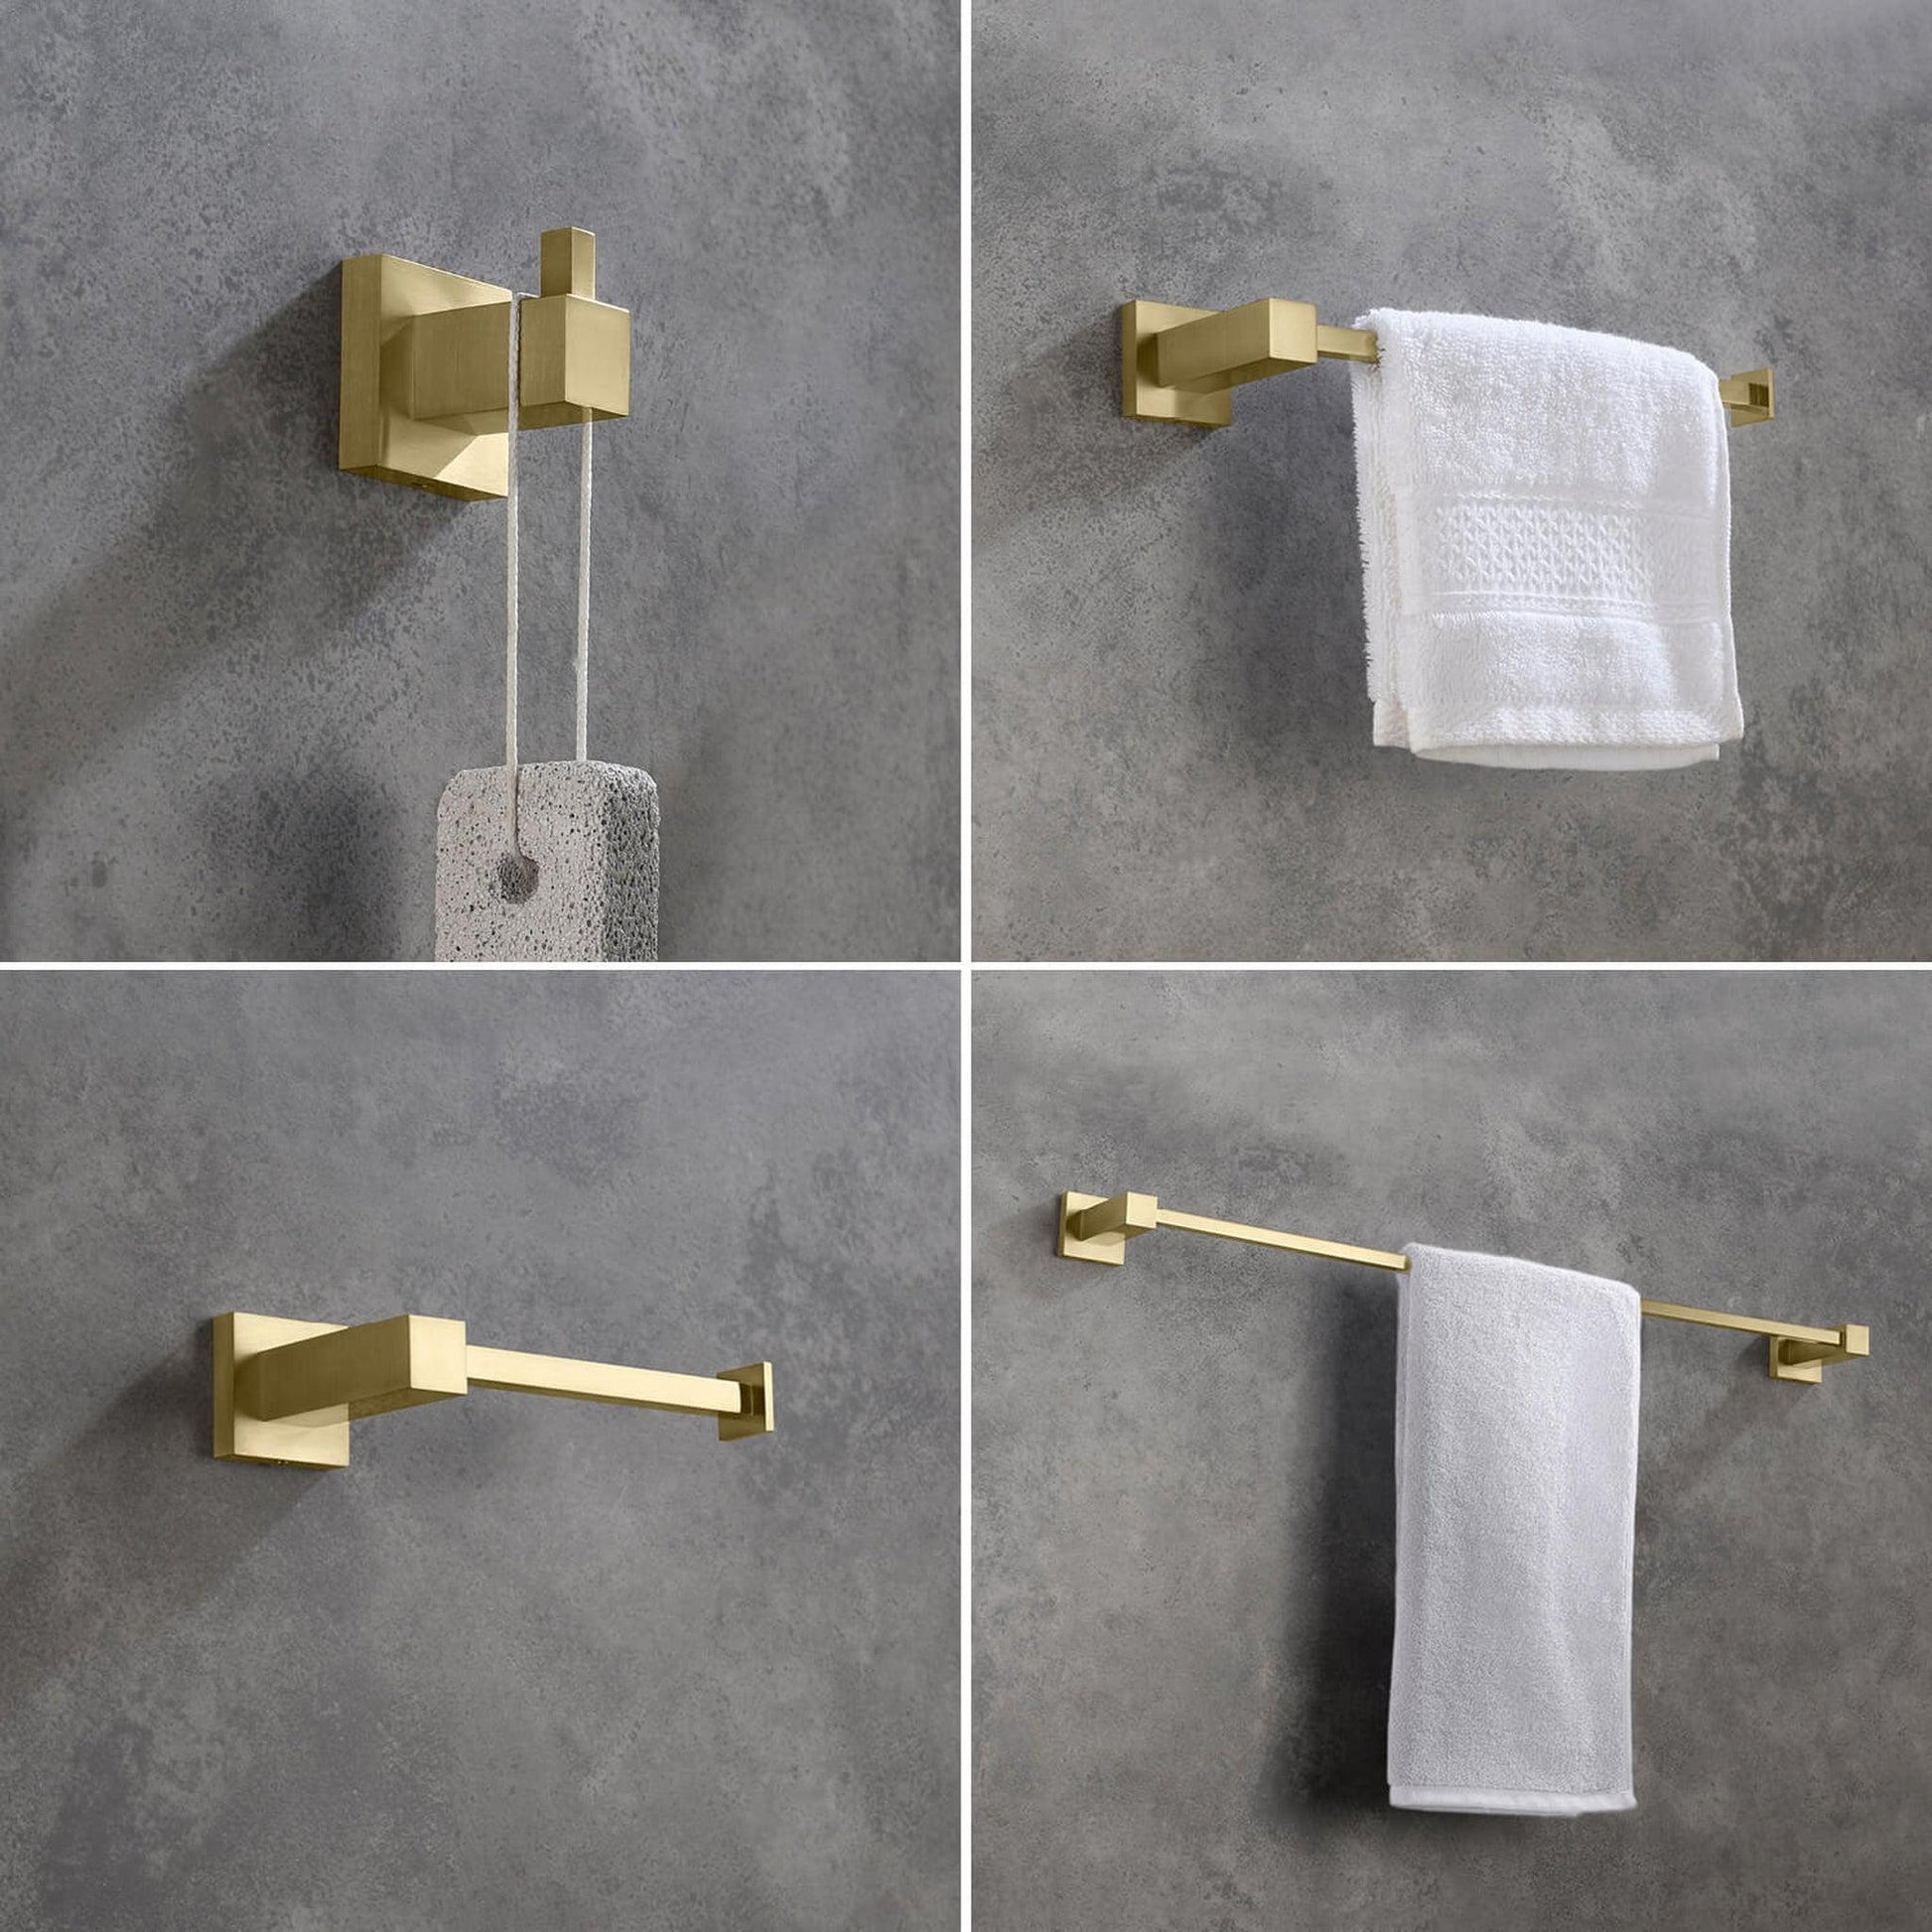 KIBI Cube Brass 4 Piece Bathroom Hardware Set in Brushed Gold Finish